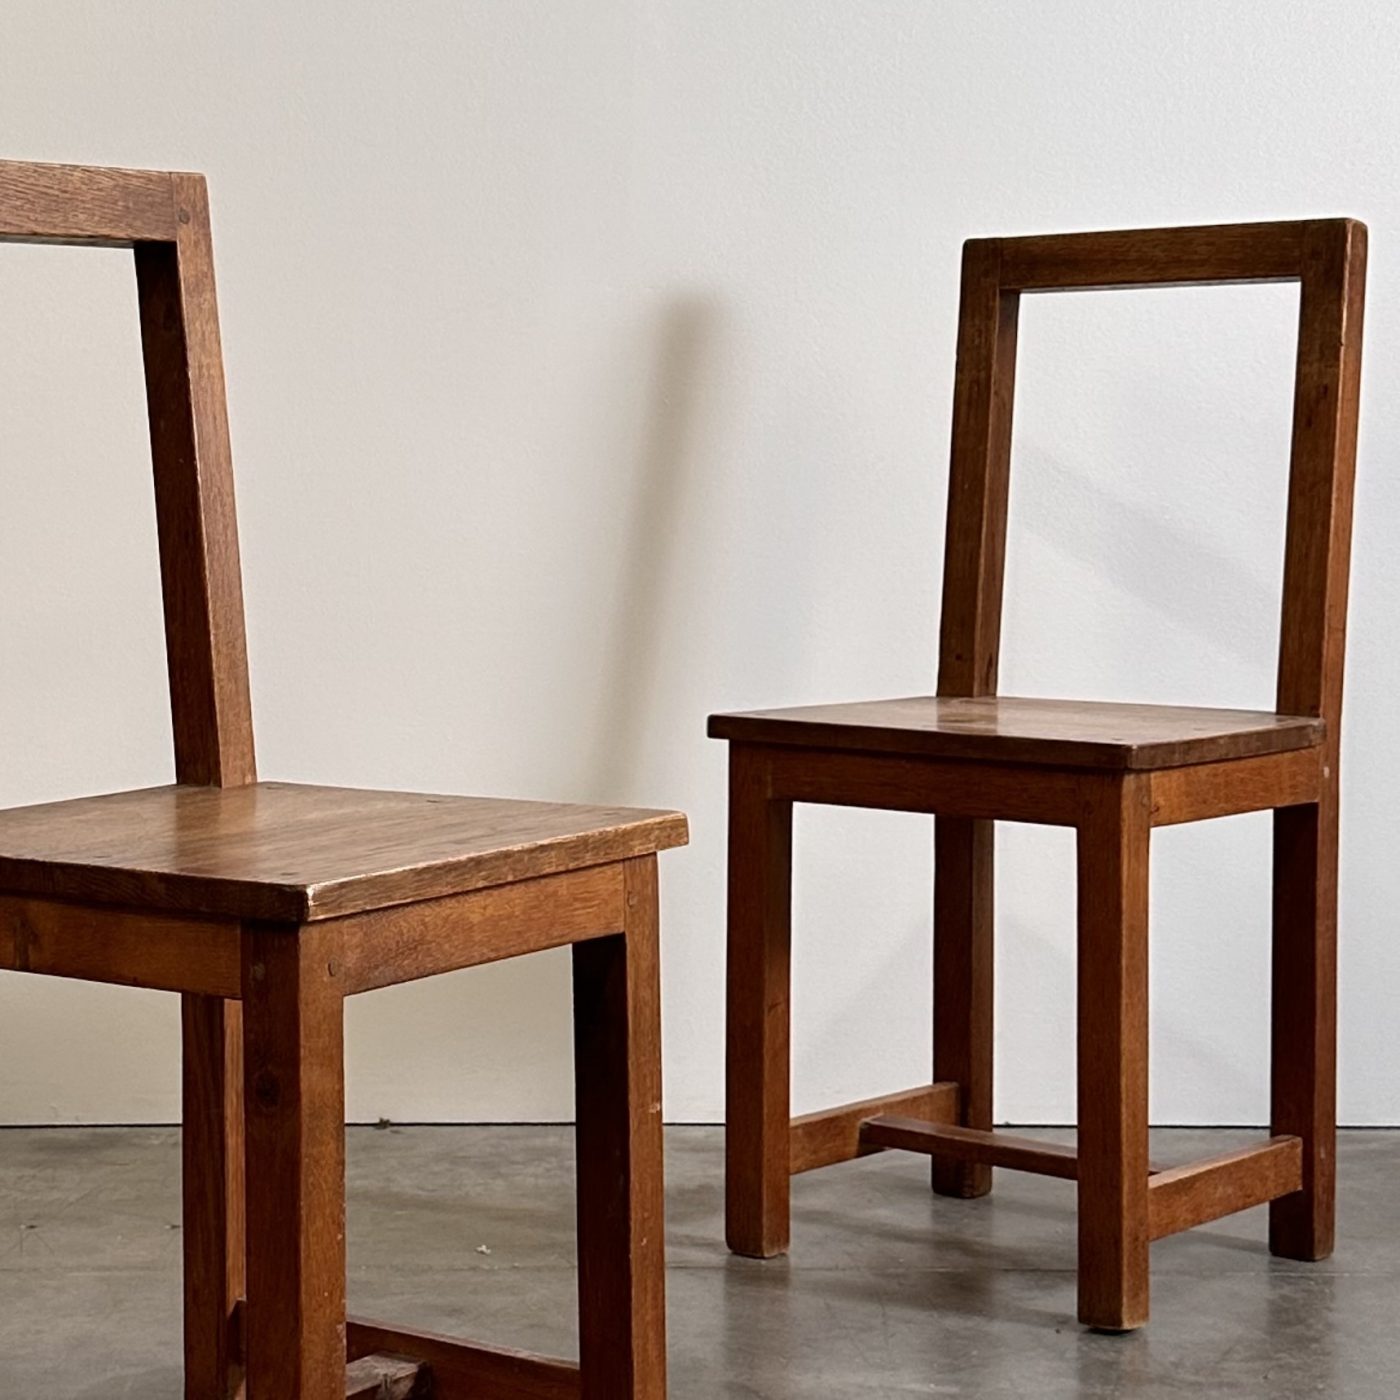 objet-vagabond-simple-chairs0004